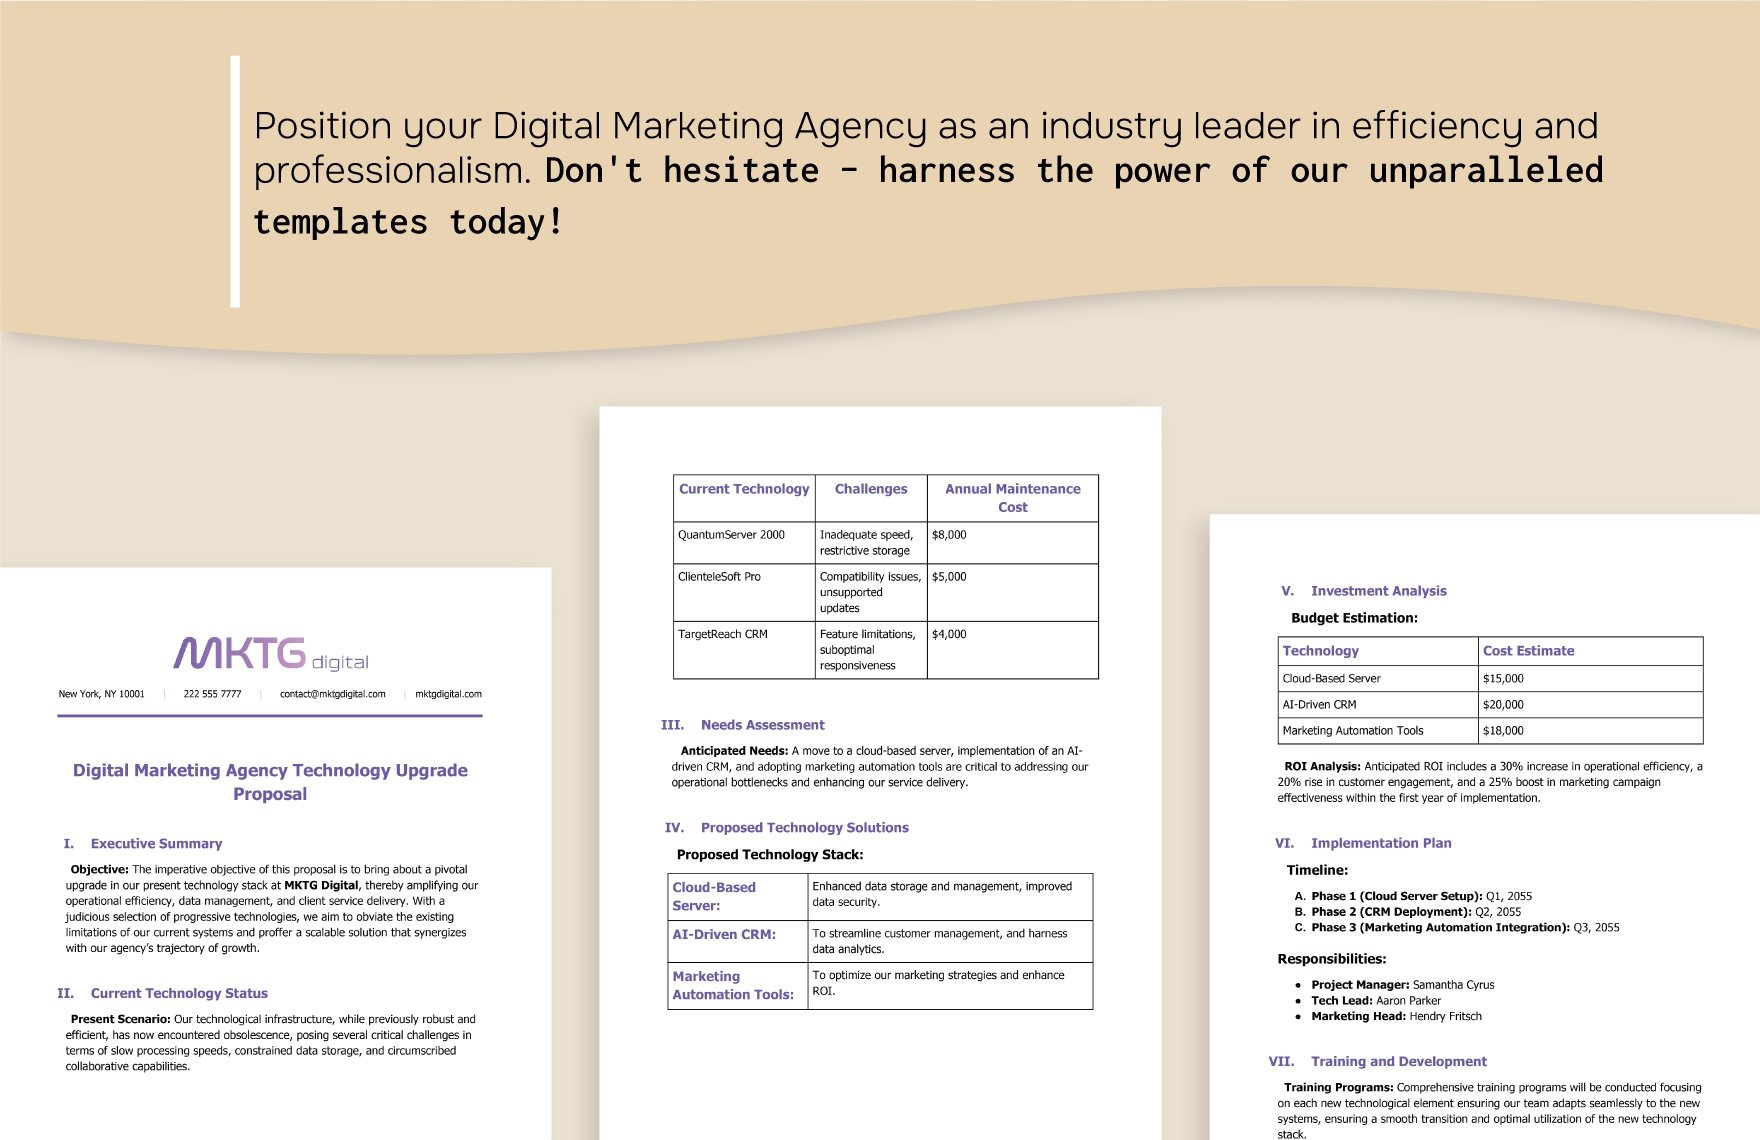 Digital Marketing Agency Technology Upgrade Proposal Template